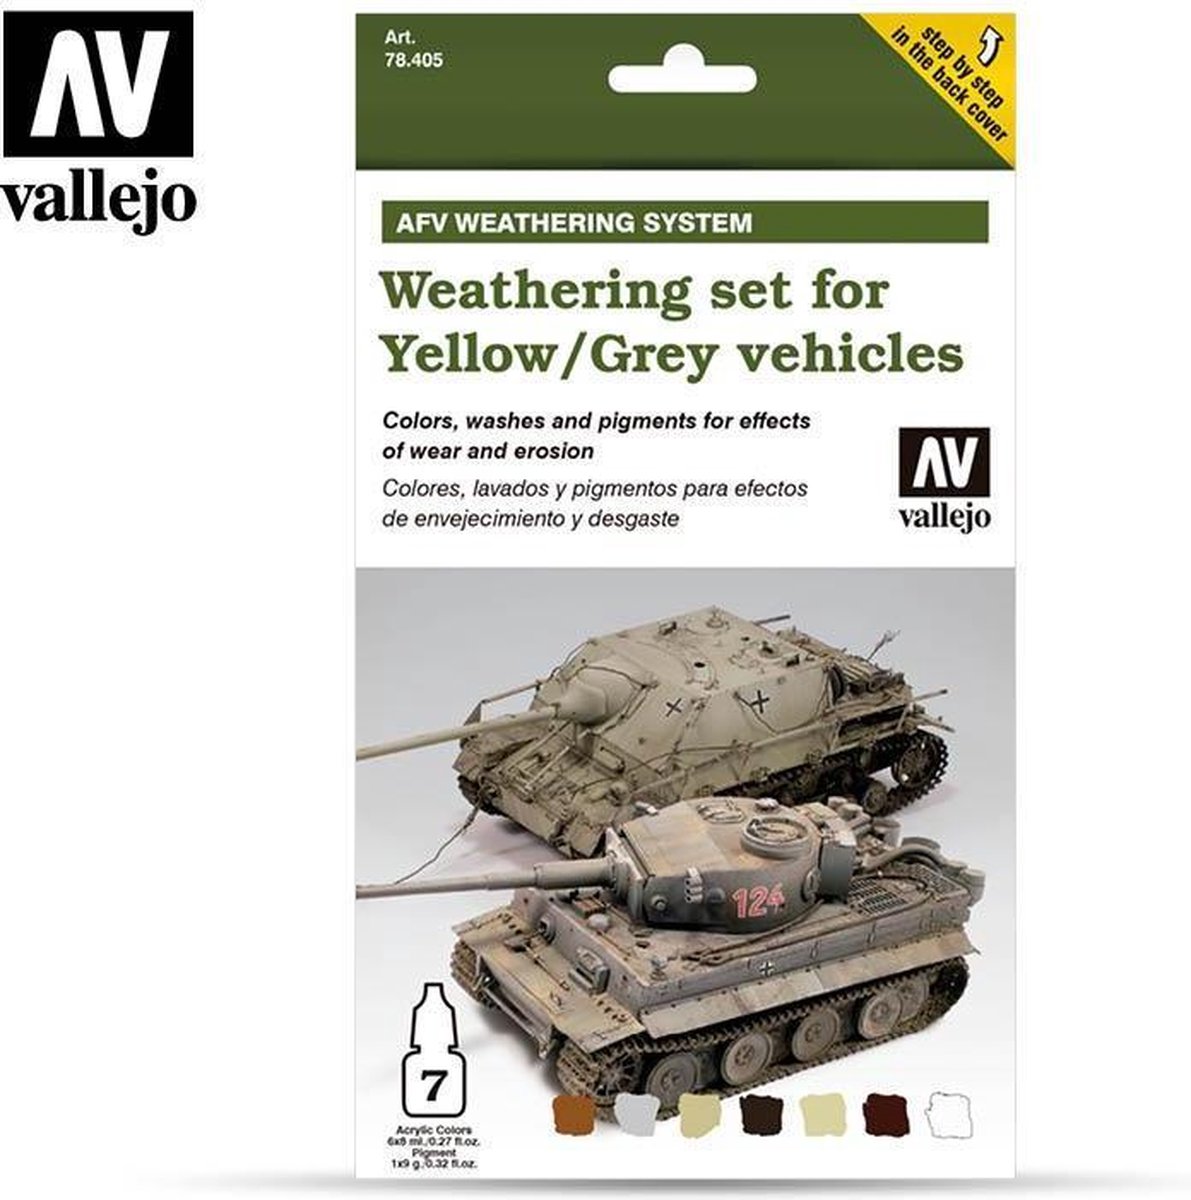 Weather. Yellow/Grey Veh. - Vallejo - VAL-78405